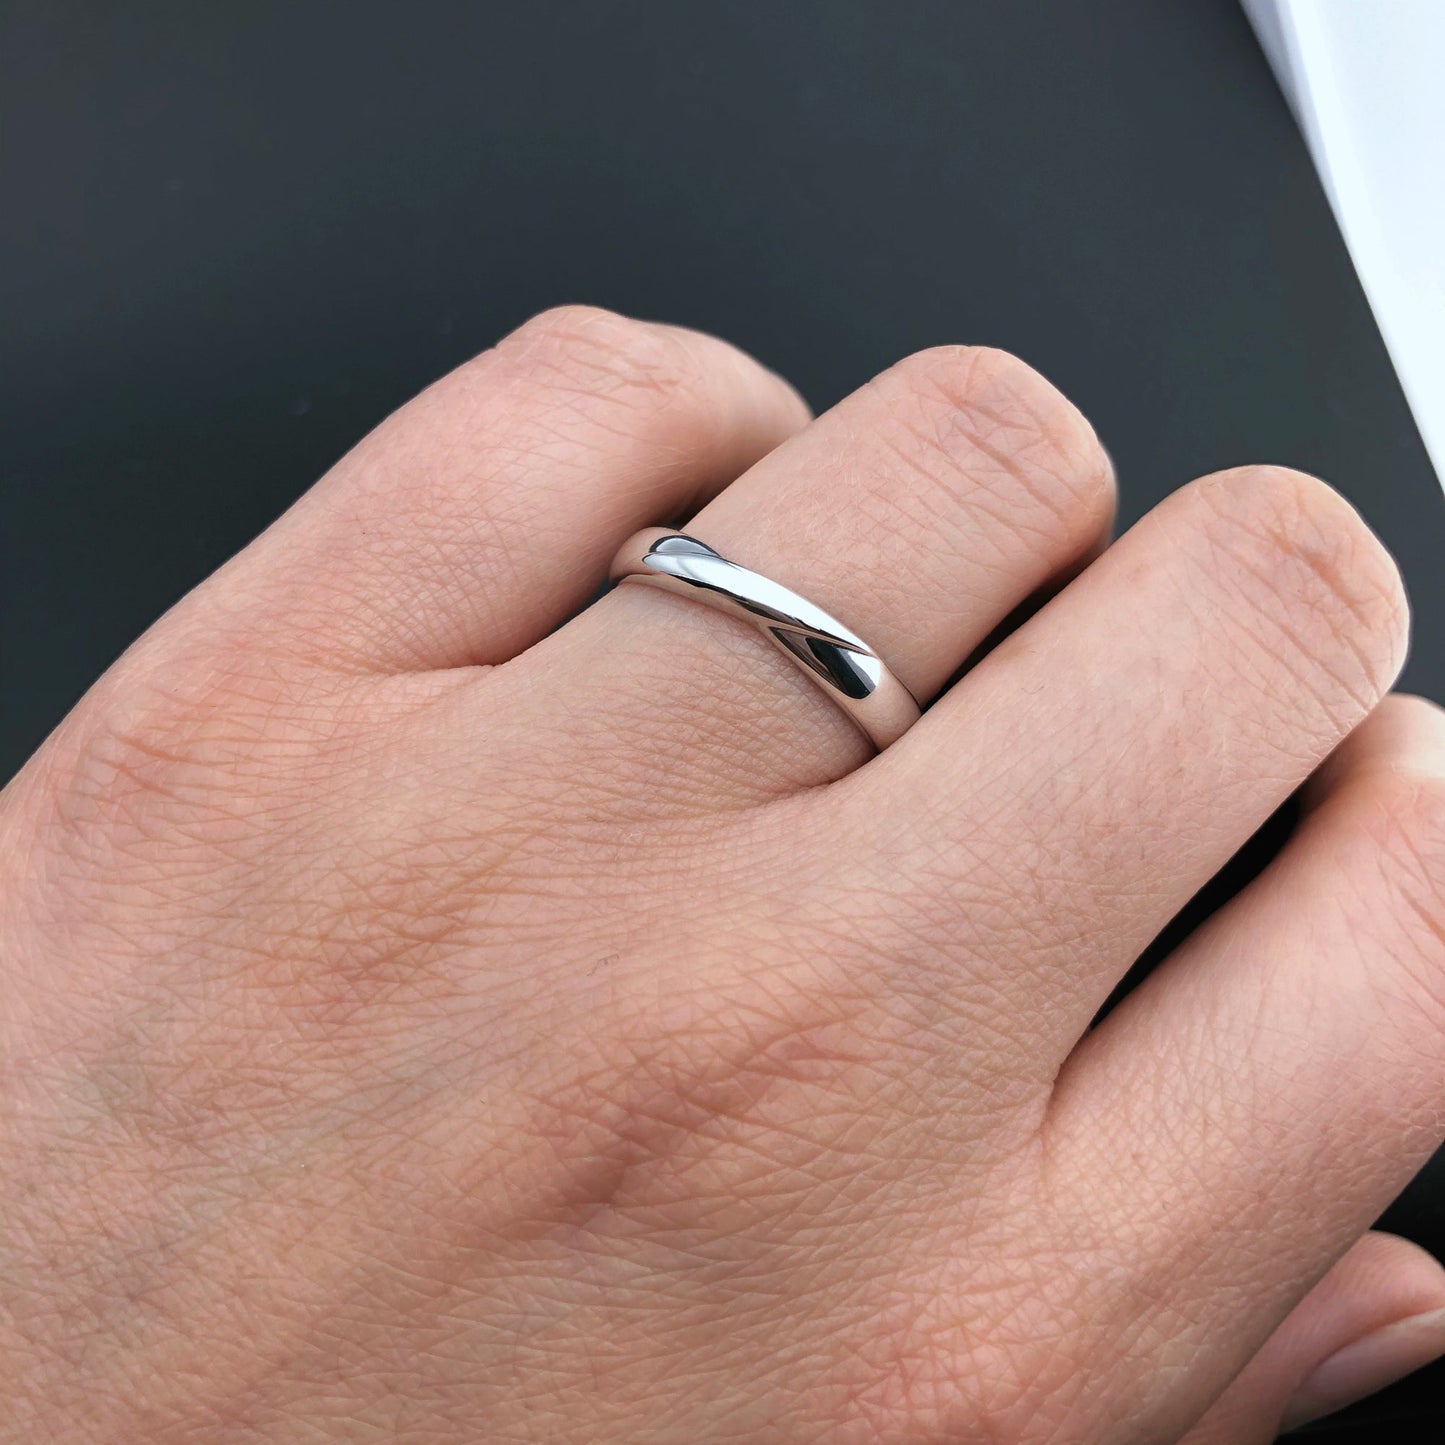 Elegant wedding rings set with diamonds in her ring - escorialjewelry